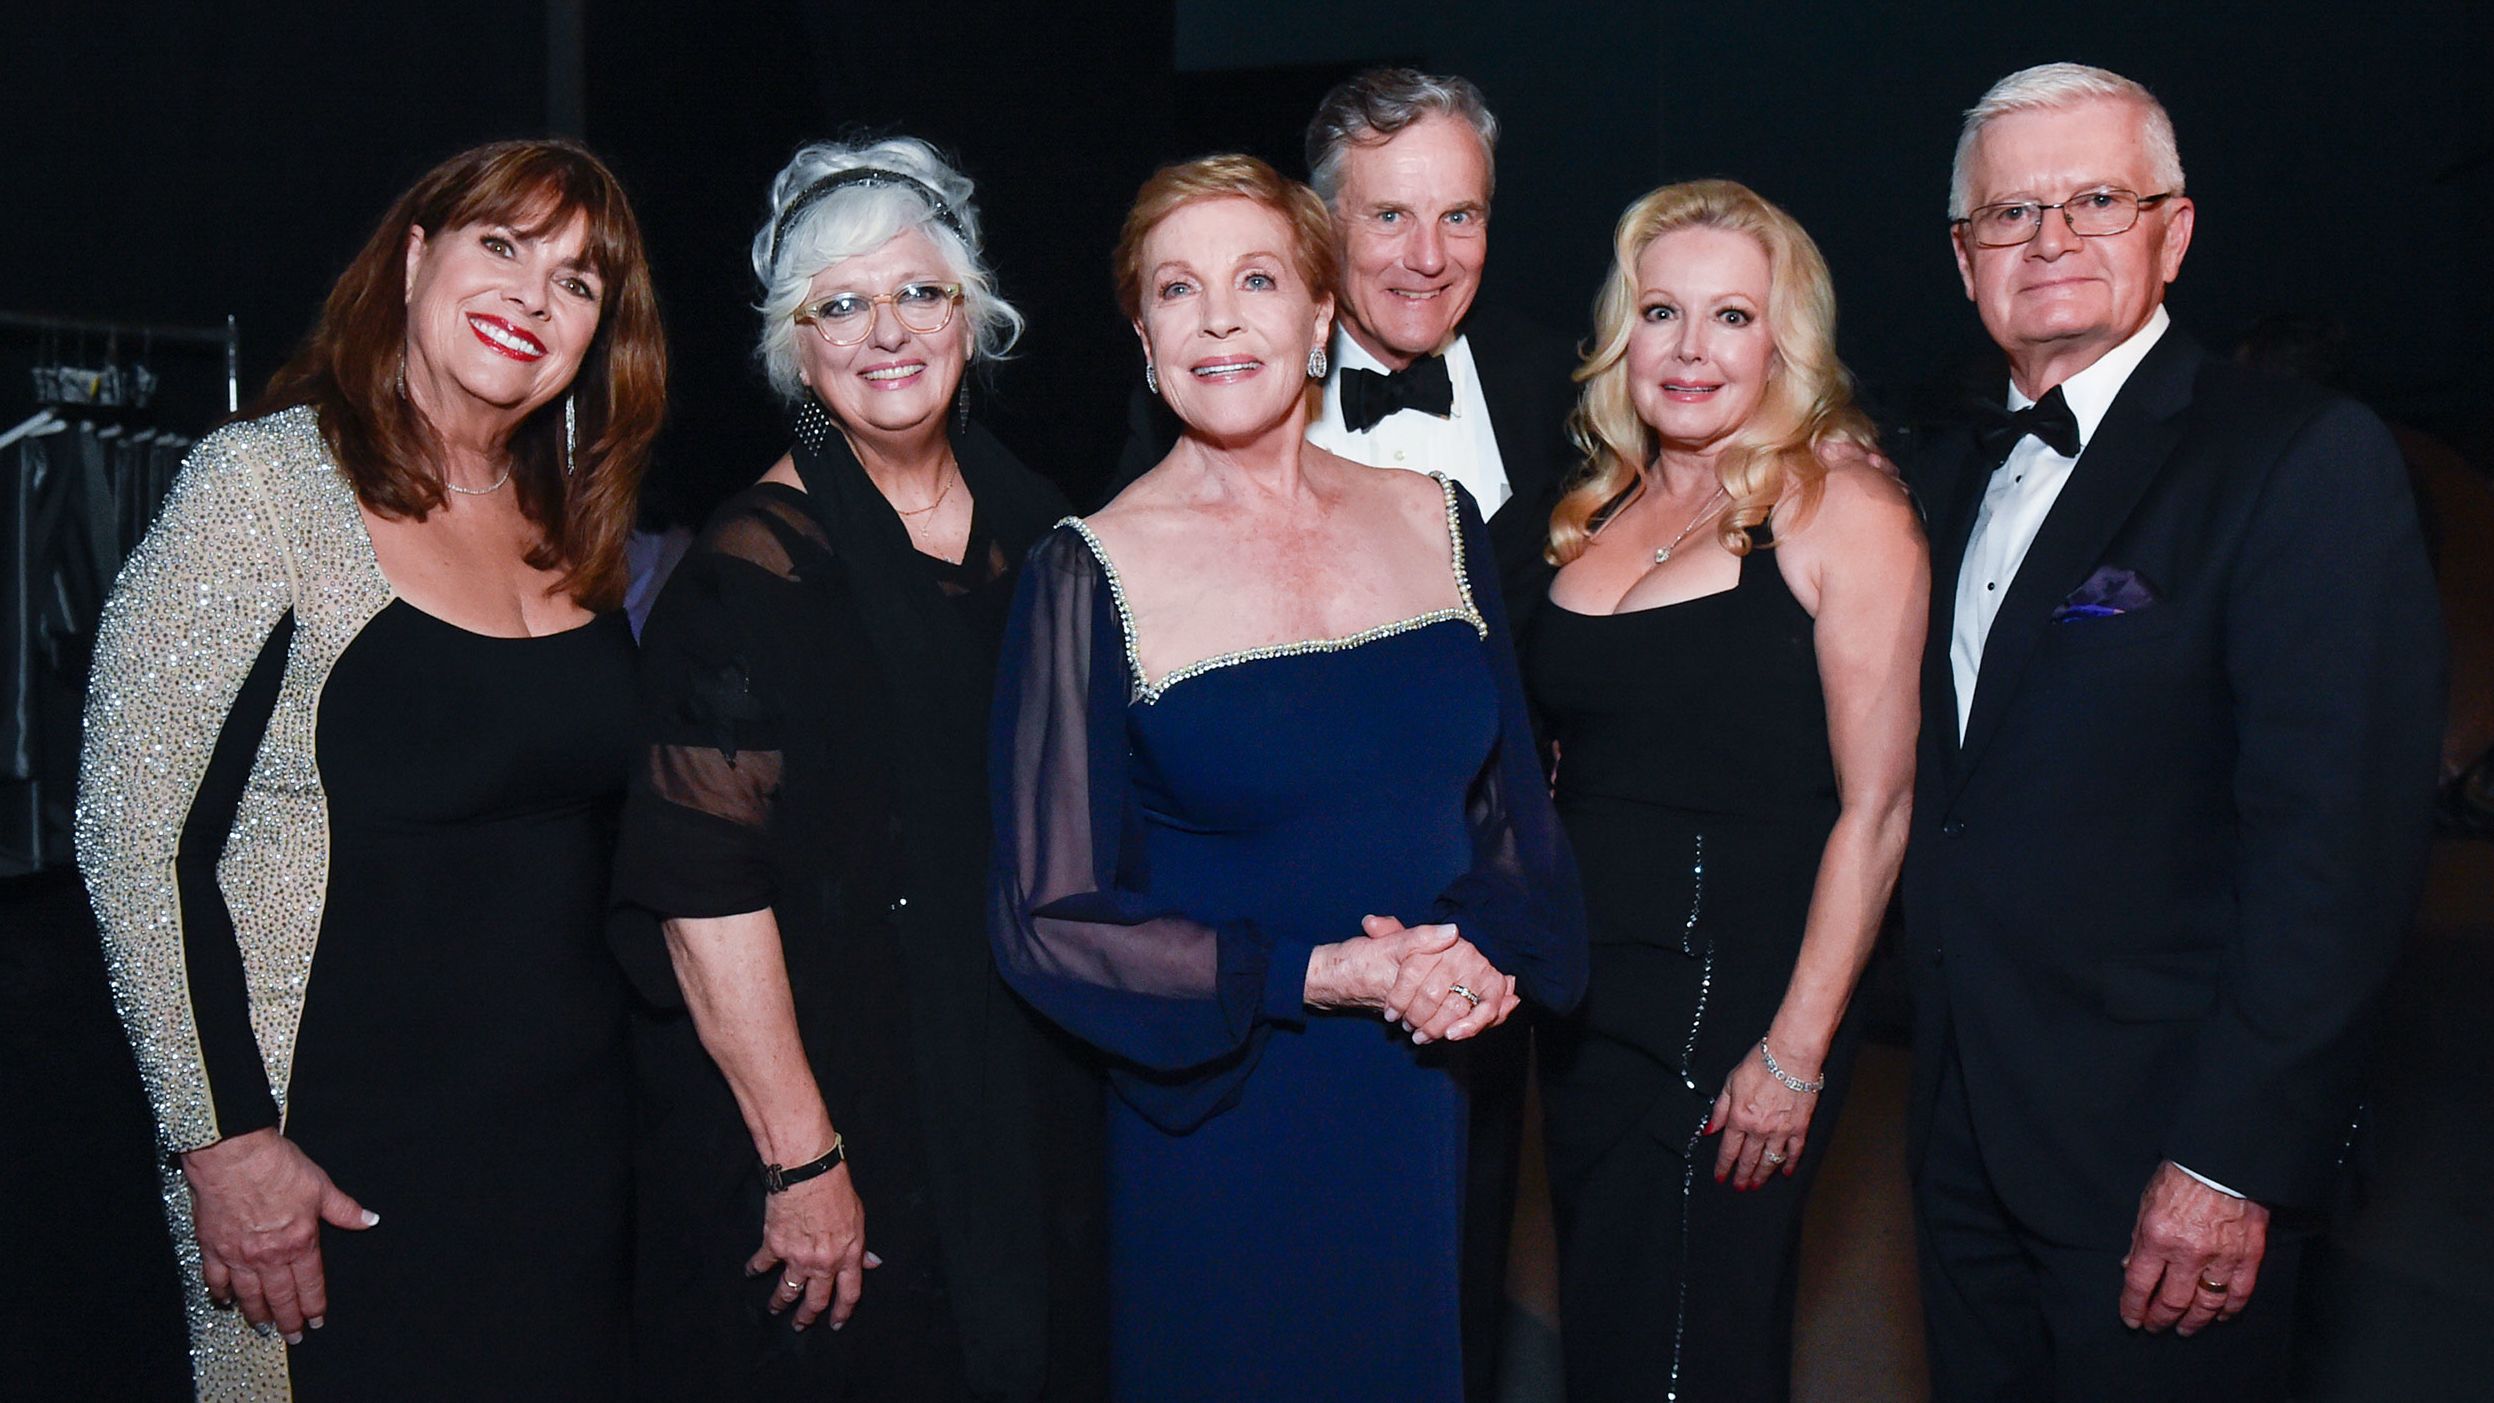 Julie Andrews reunites with the "Sound of Music" cast: (L-R) Debbie Turner, Angela Cartwright, Julie Andrews, Nicholas Hammond, Kym Karath and Duane Chase.